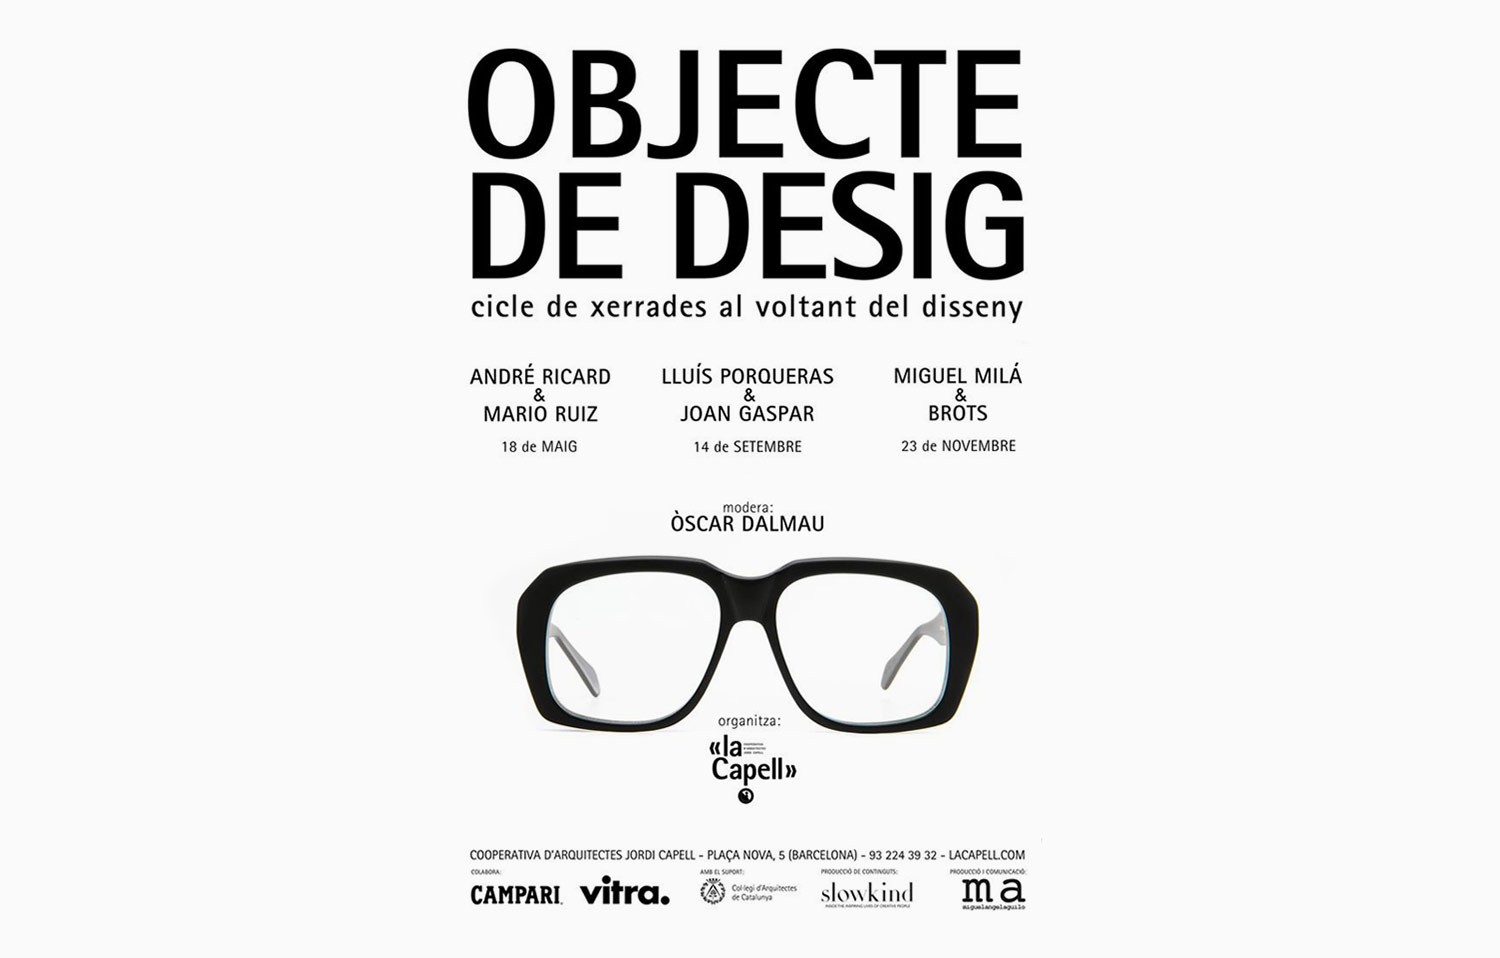 Object de Desig event with designers Andre Ricard and Mario Ruiz